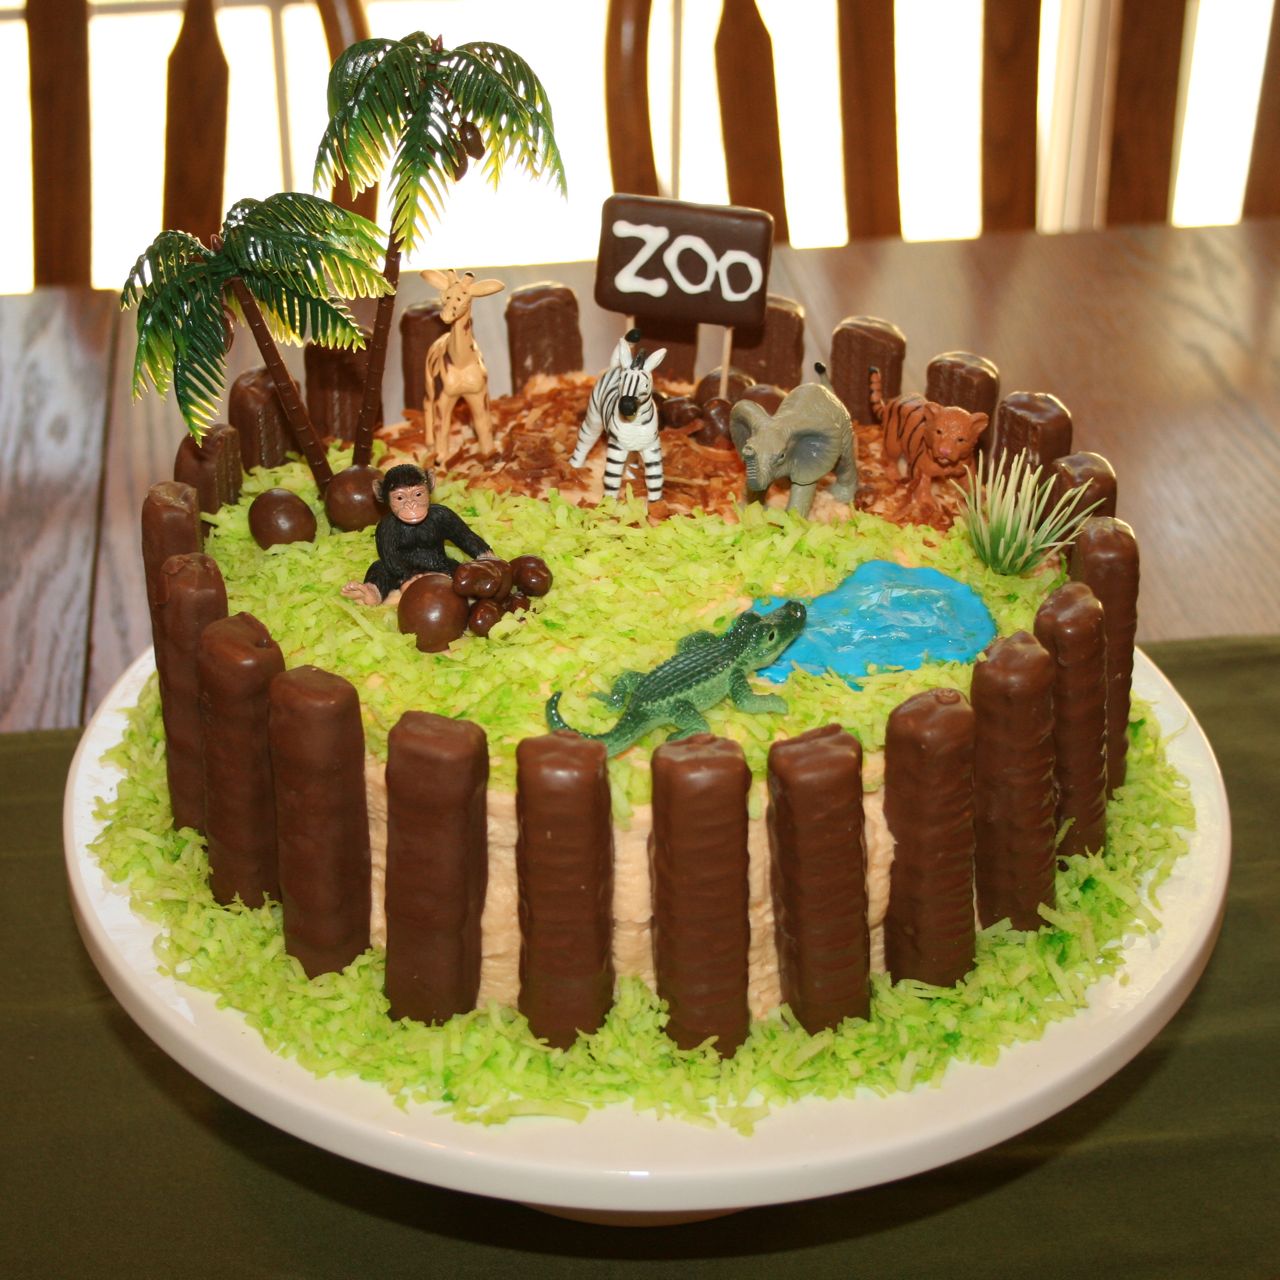 Baby Zoo Animals Birthday Cake - CakeCentral.com